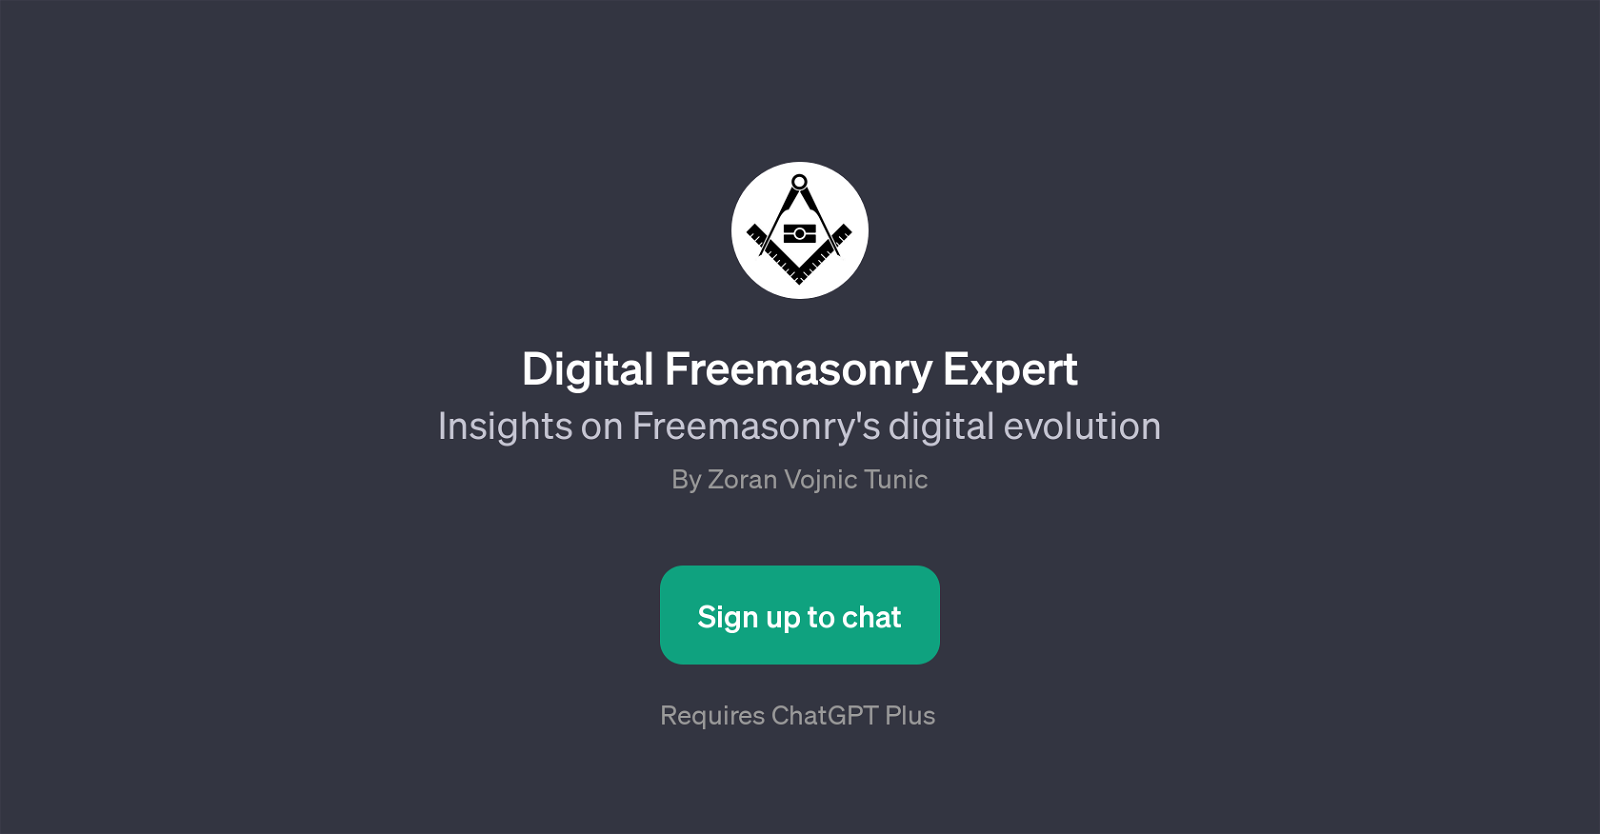 Digital Freemasonry Expert website